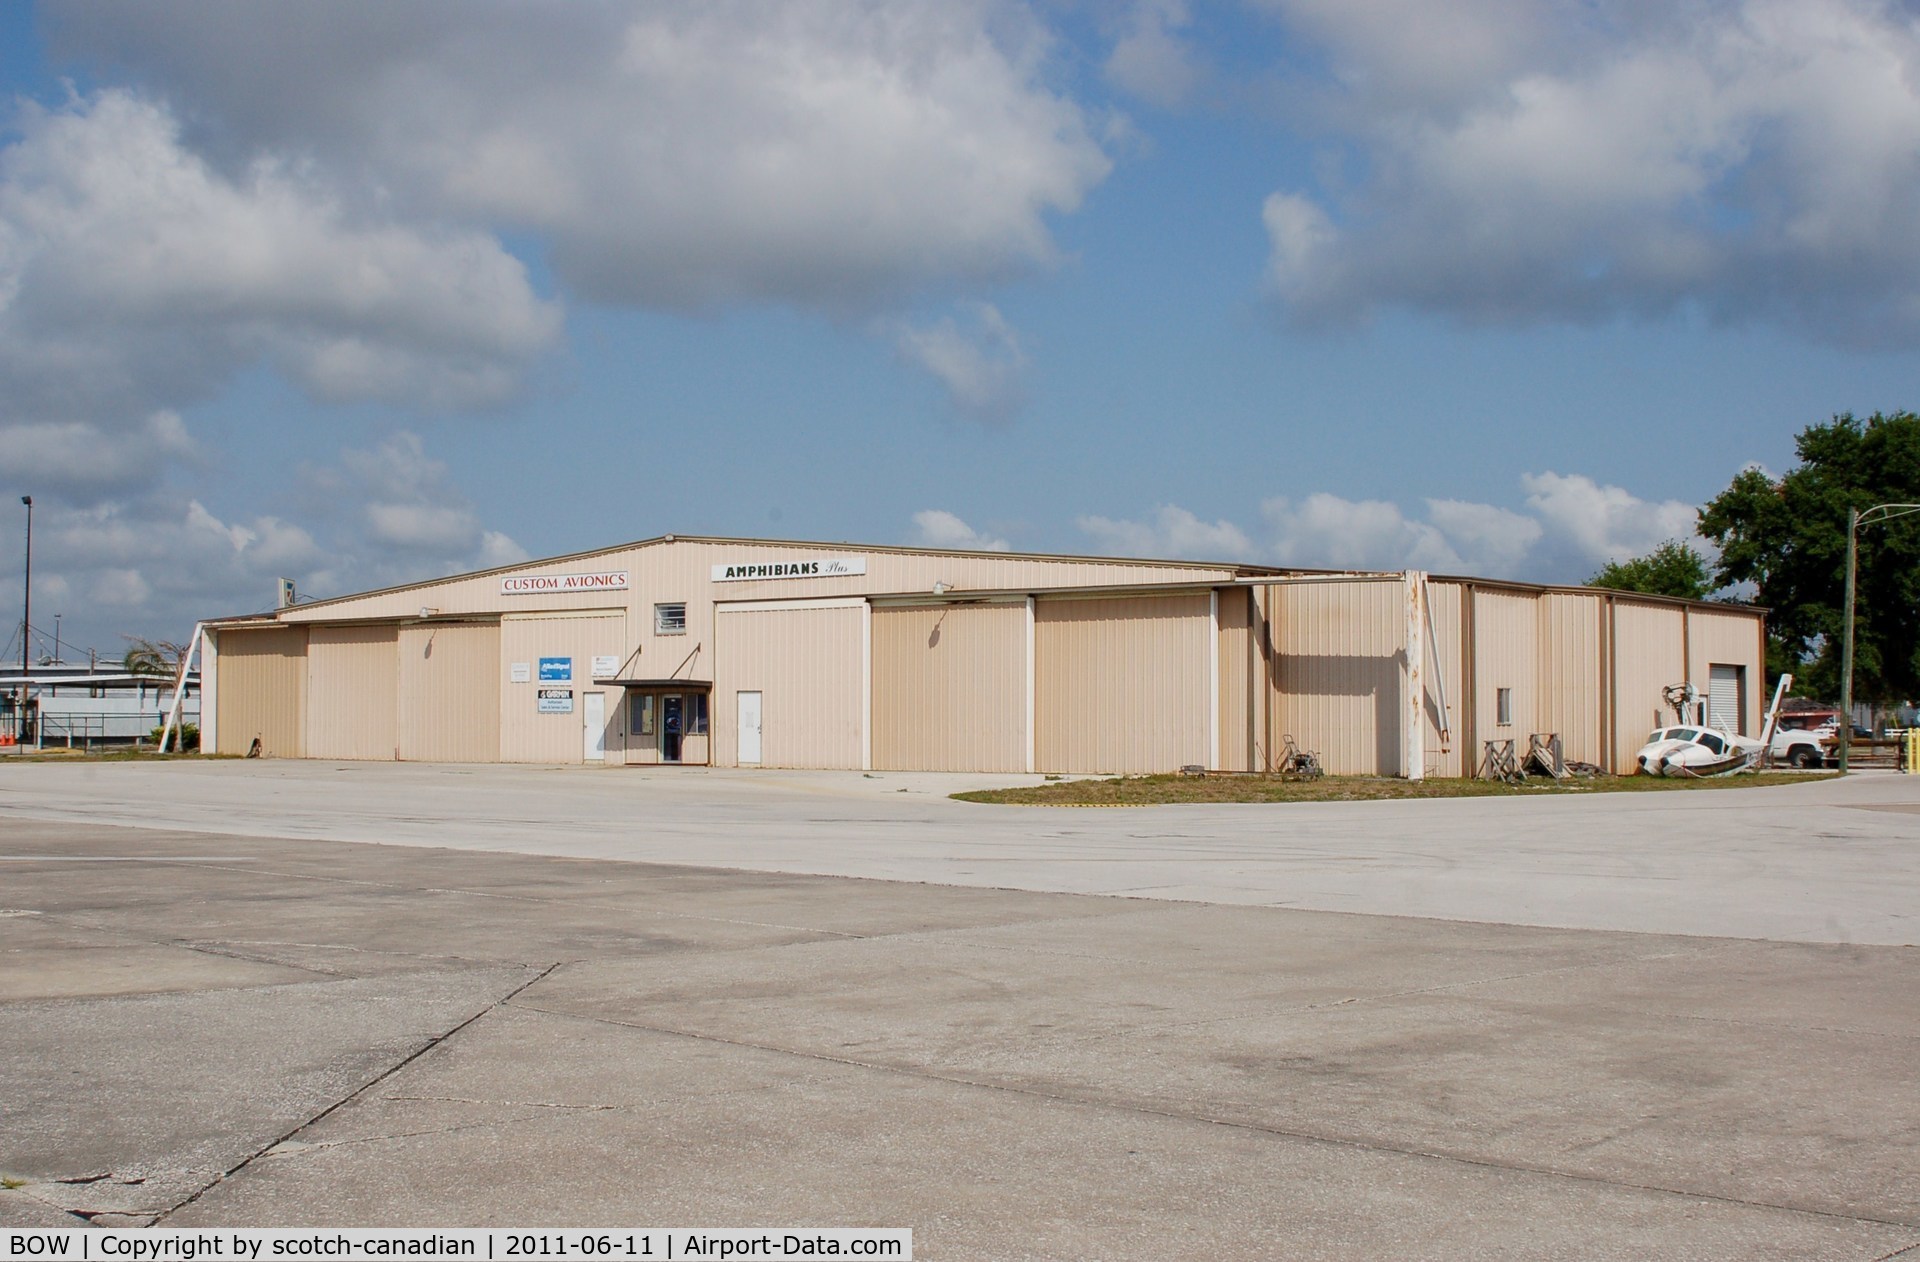 Bartow Municipal Airport (BOW) - Custon Avionics and Amphibians Plus at Bartow Municipal Airport, Bartow, FL